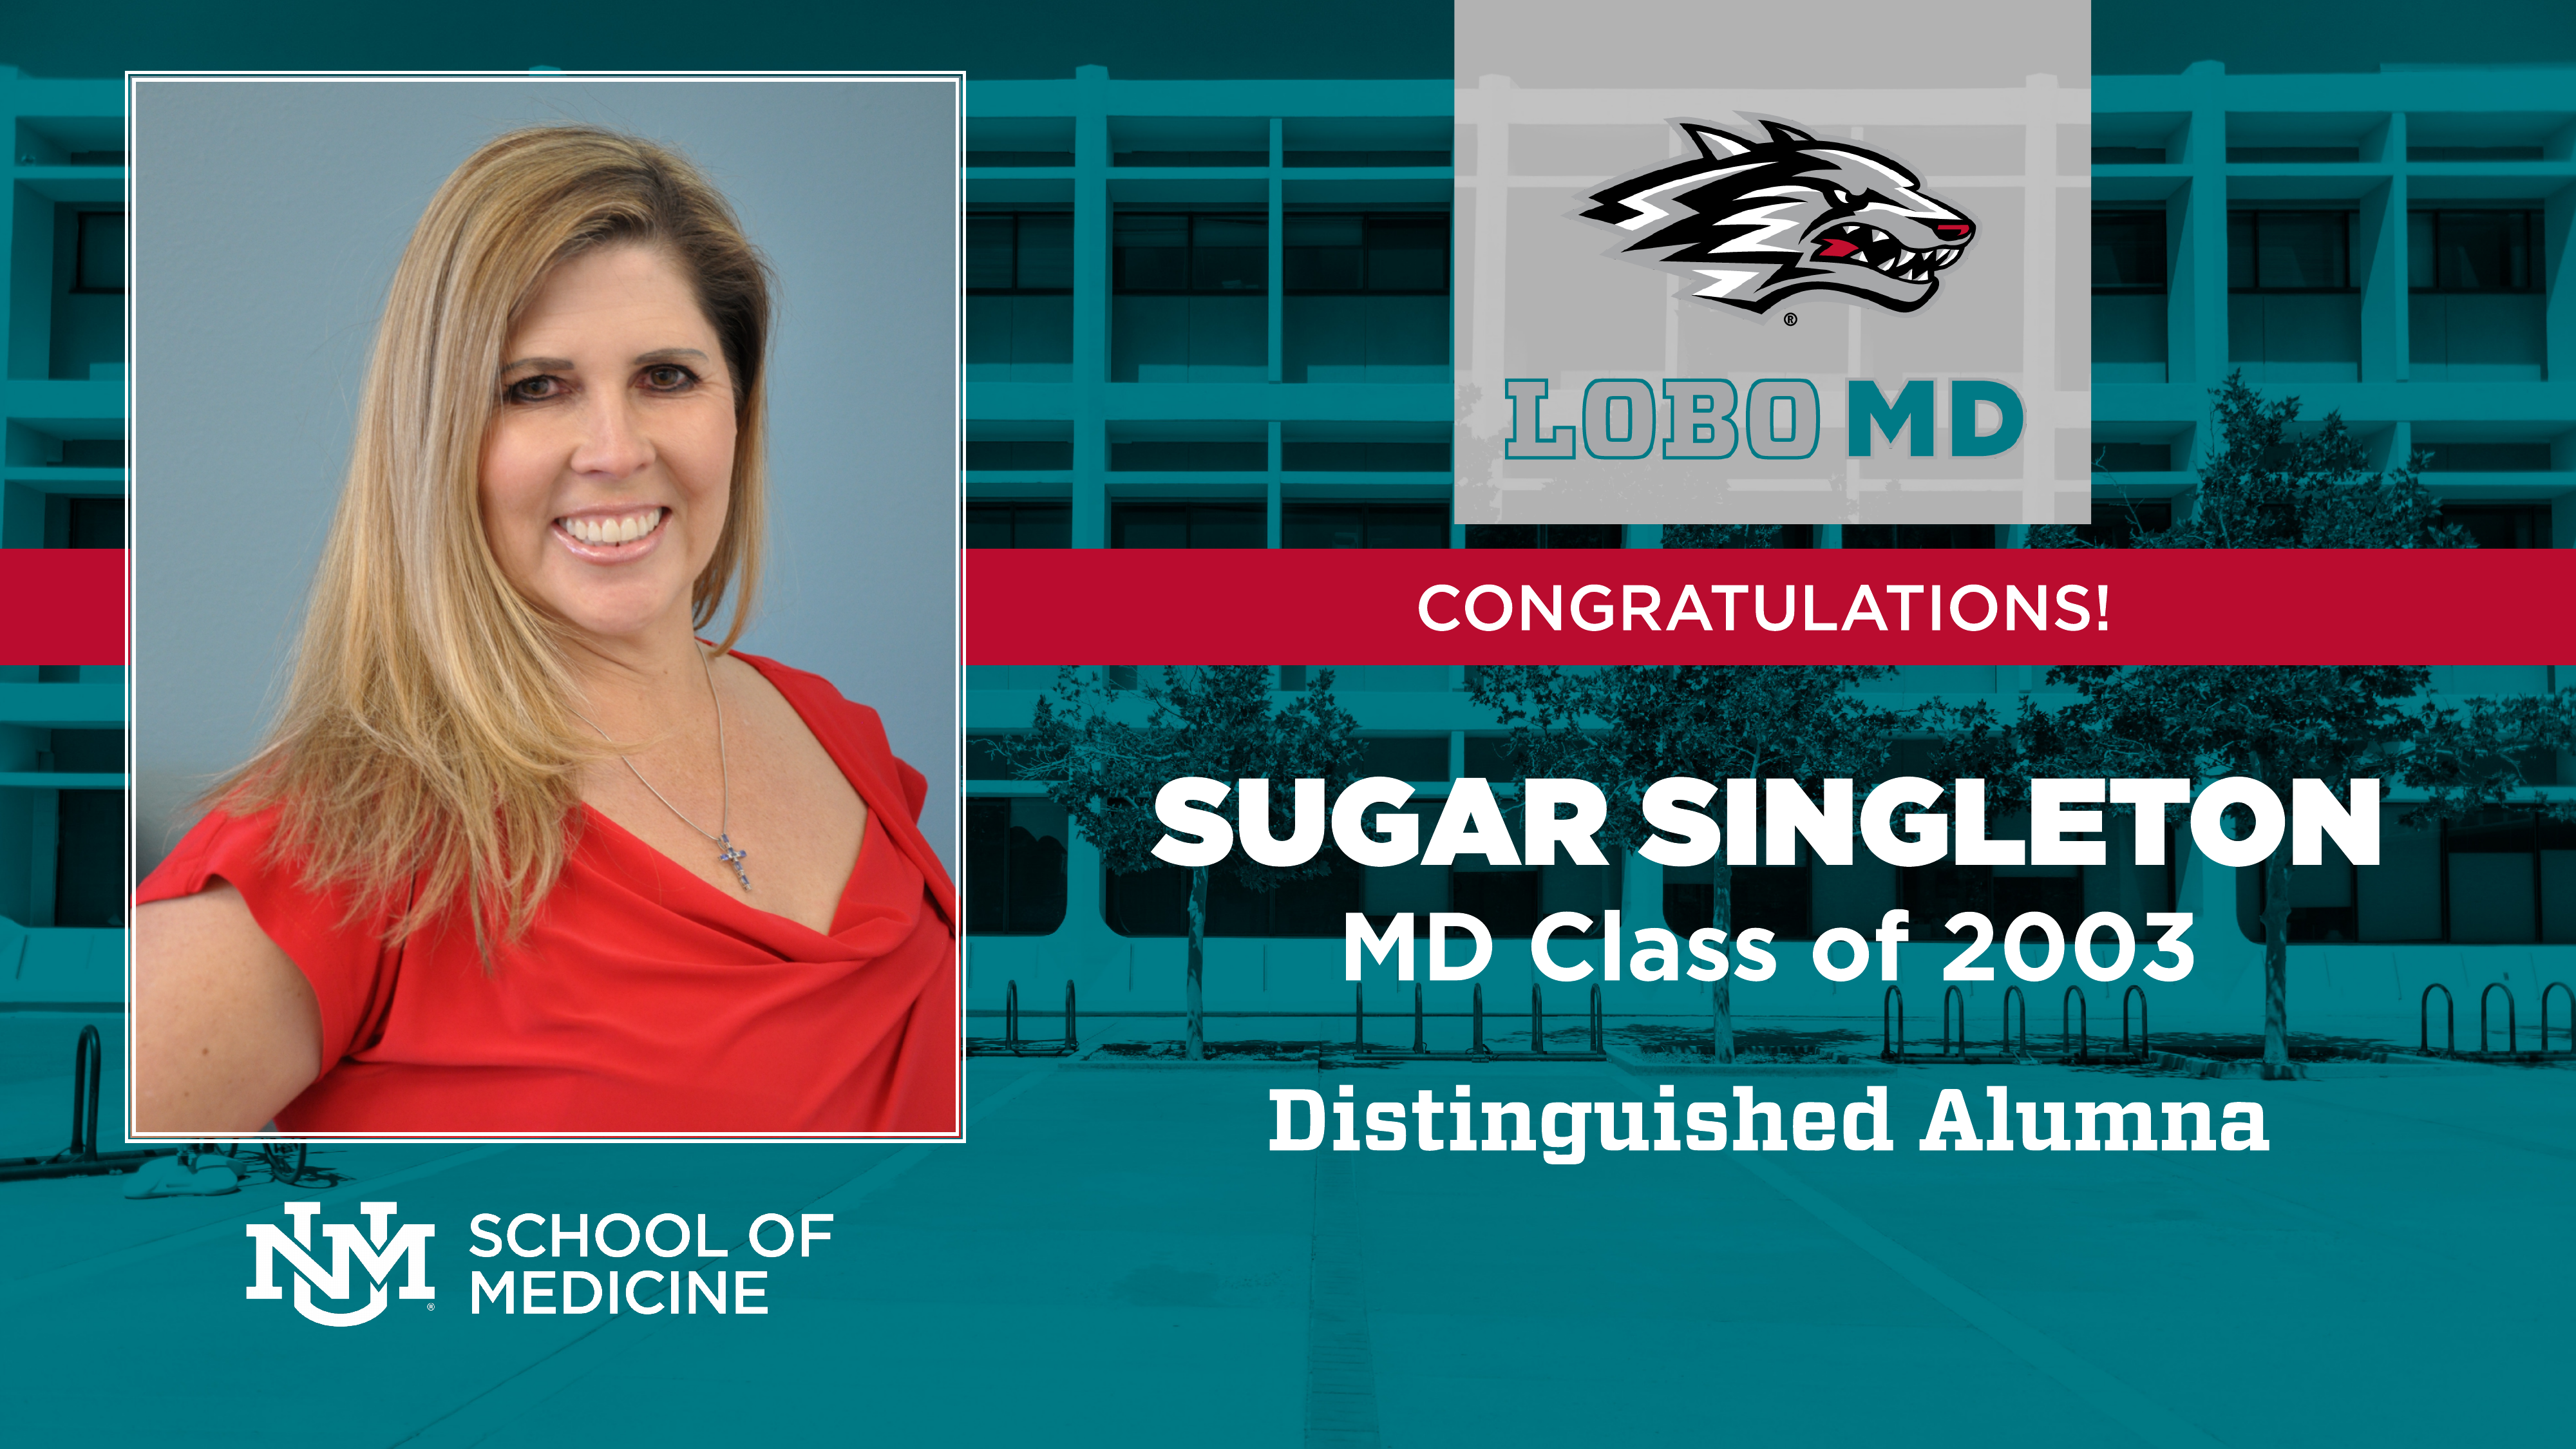 Dr. Sugar Singleton